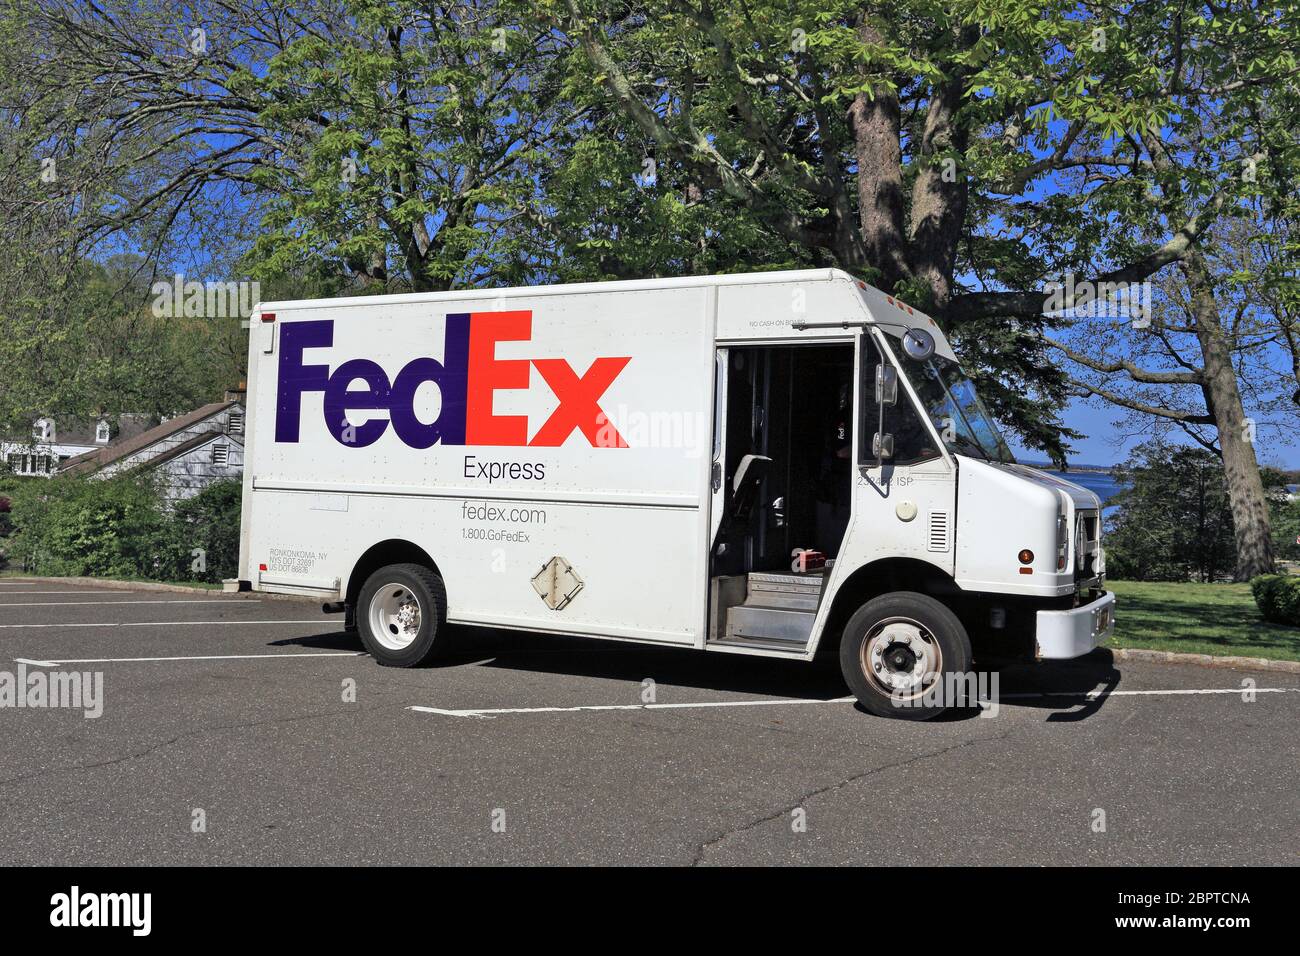 Fedex delivery truck Stony Brook Long Island New York Stock Photo